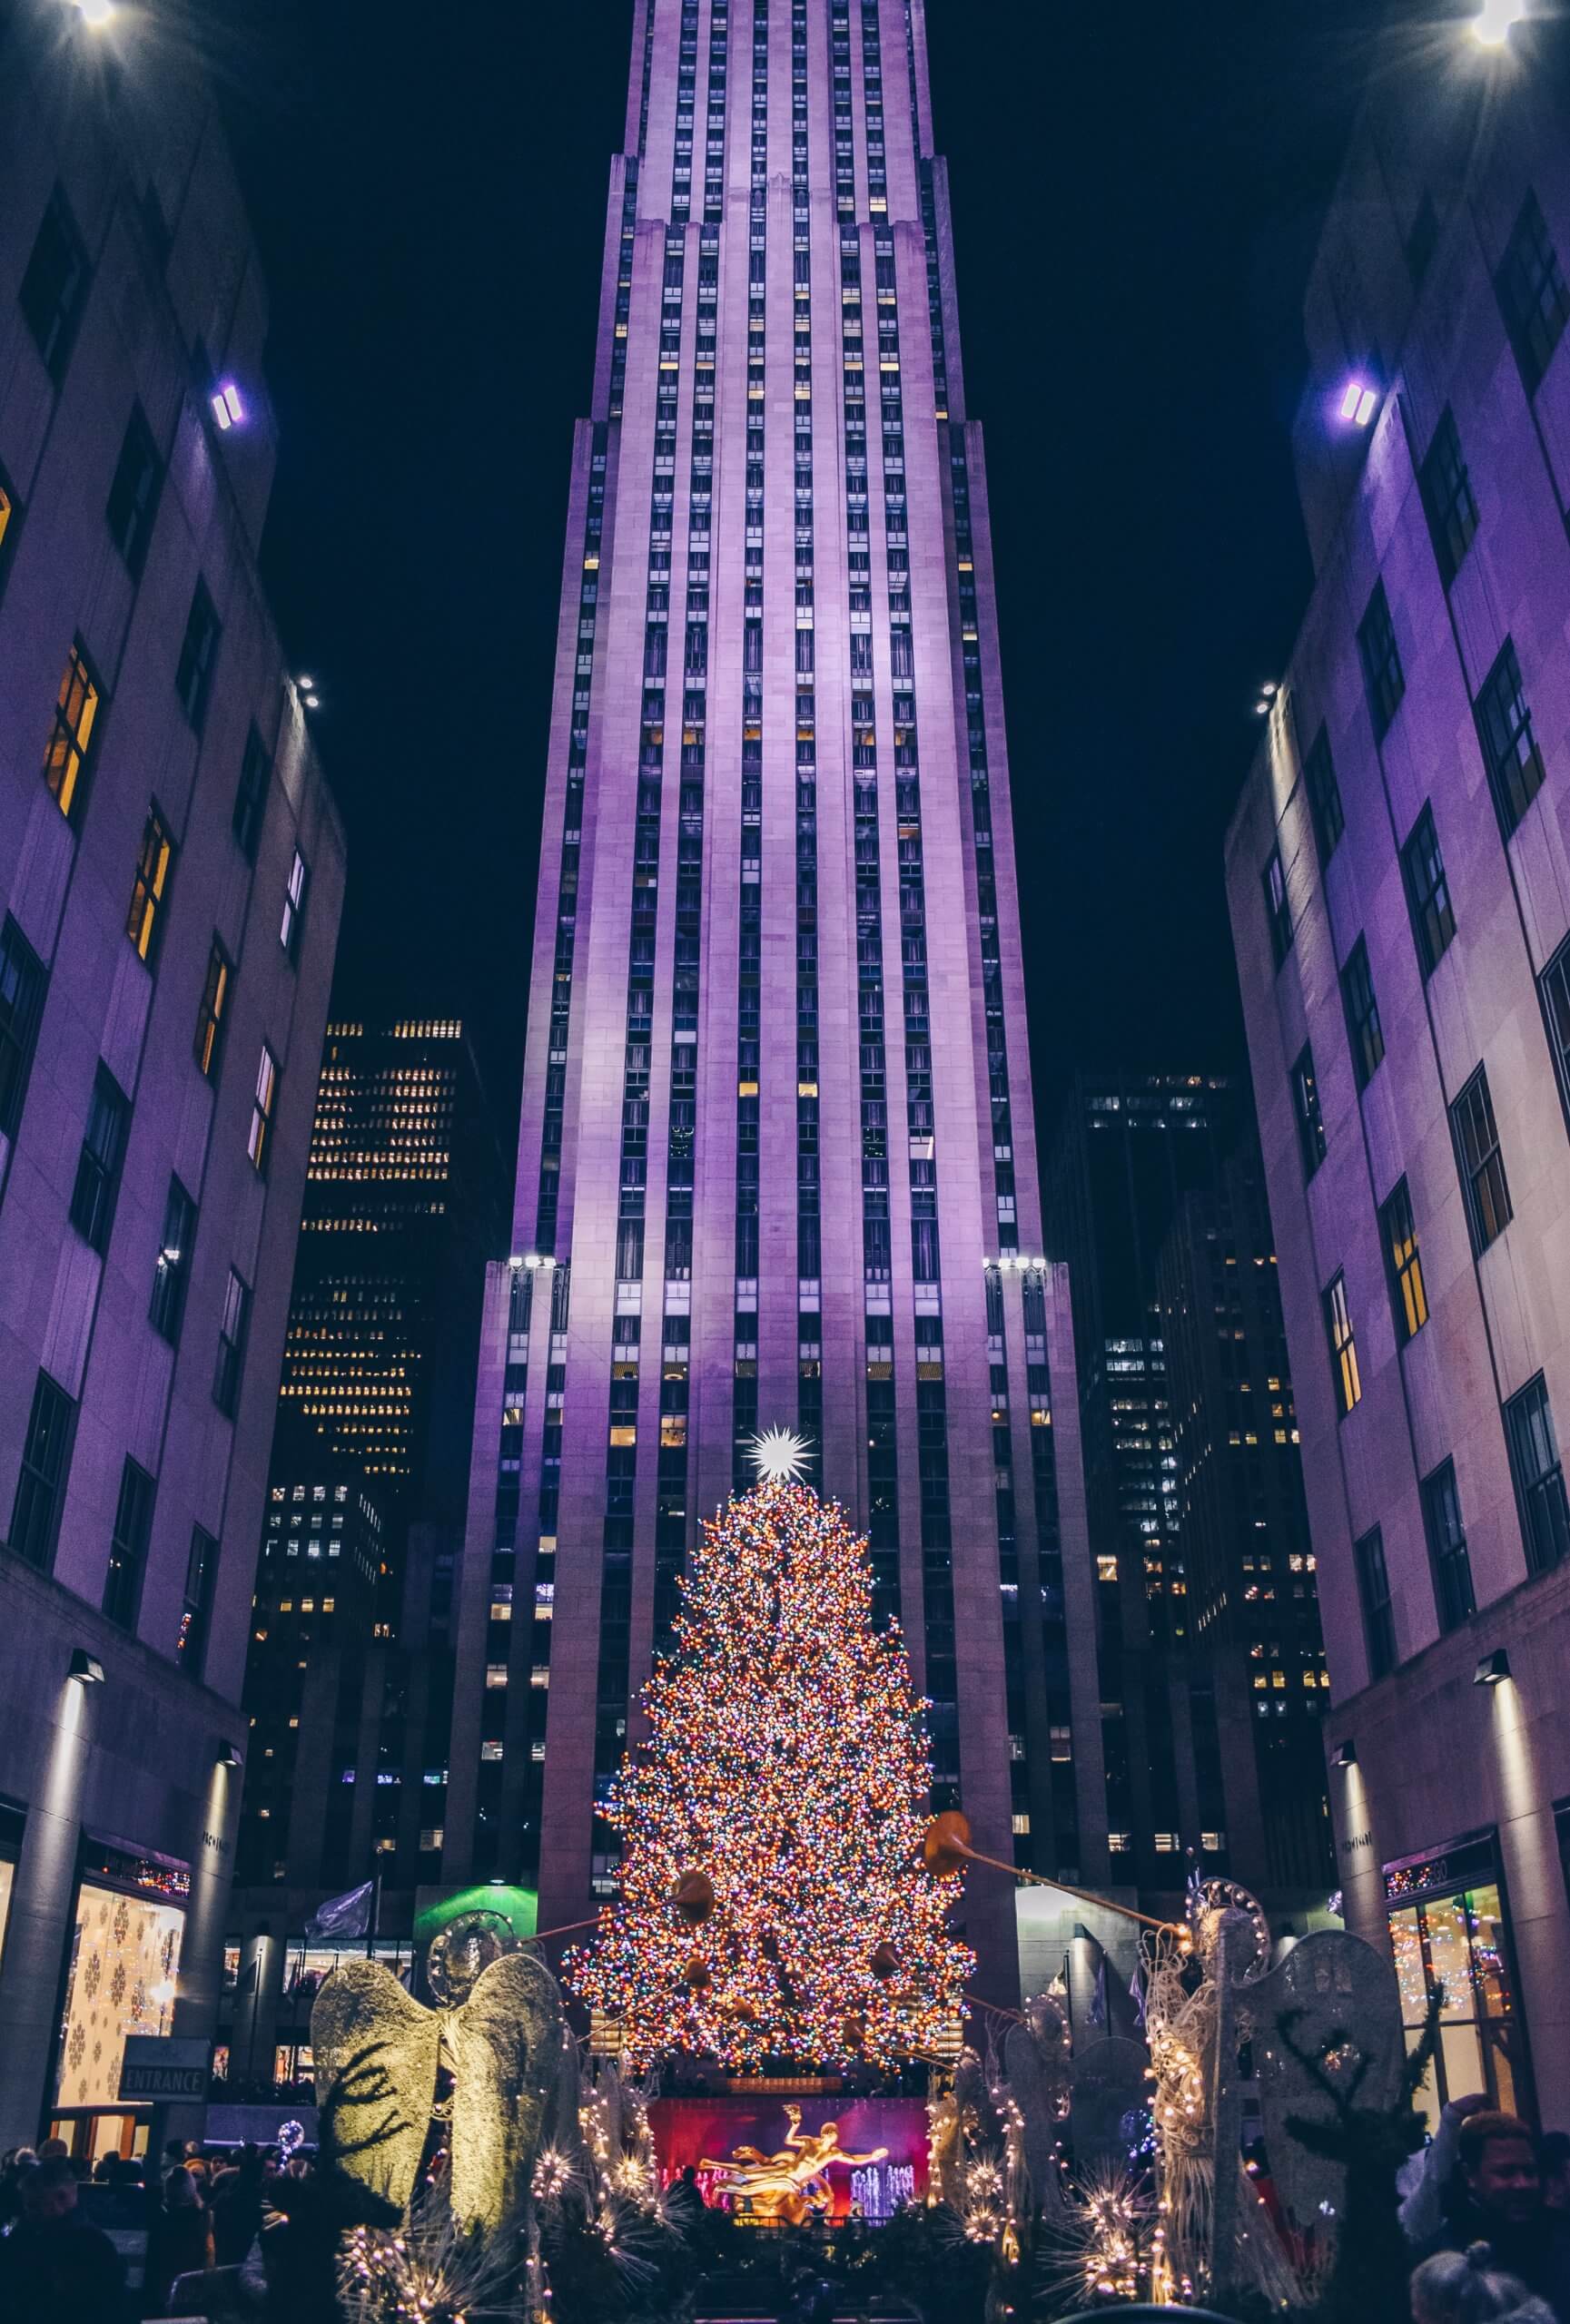 Instagrammable Spots In NYC 2021- Rockefeller Center